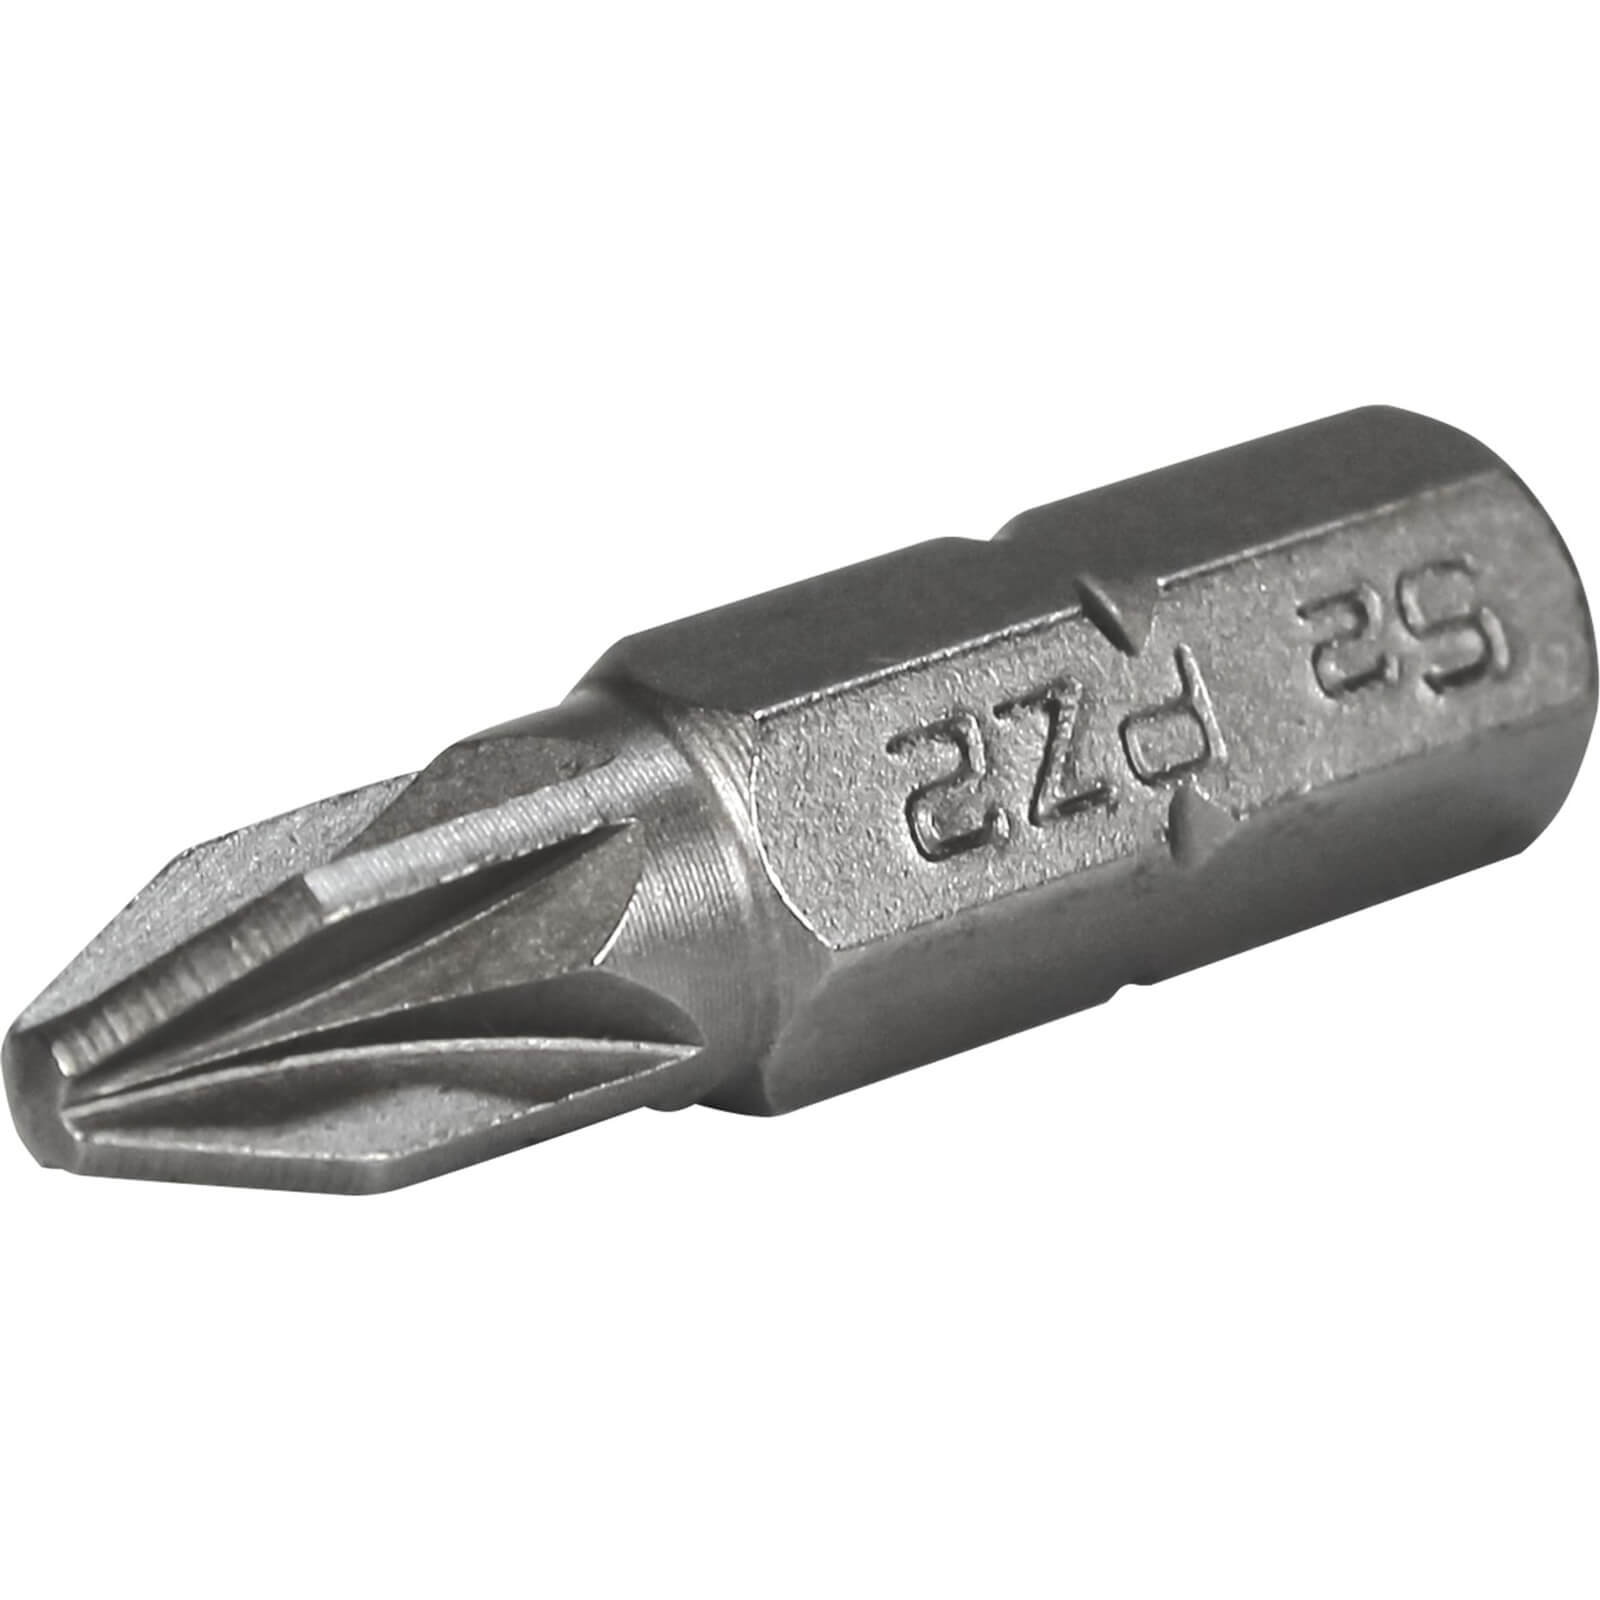 Image of Faithfull Pozi S2 Grade Steel Screwdriver Bits PZ2 25mm Pack of 3